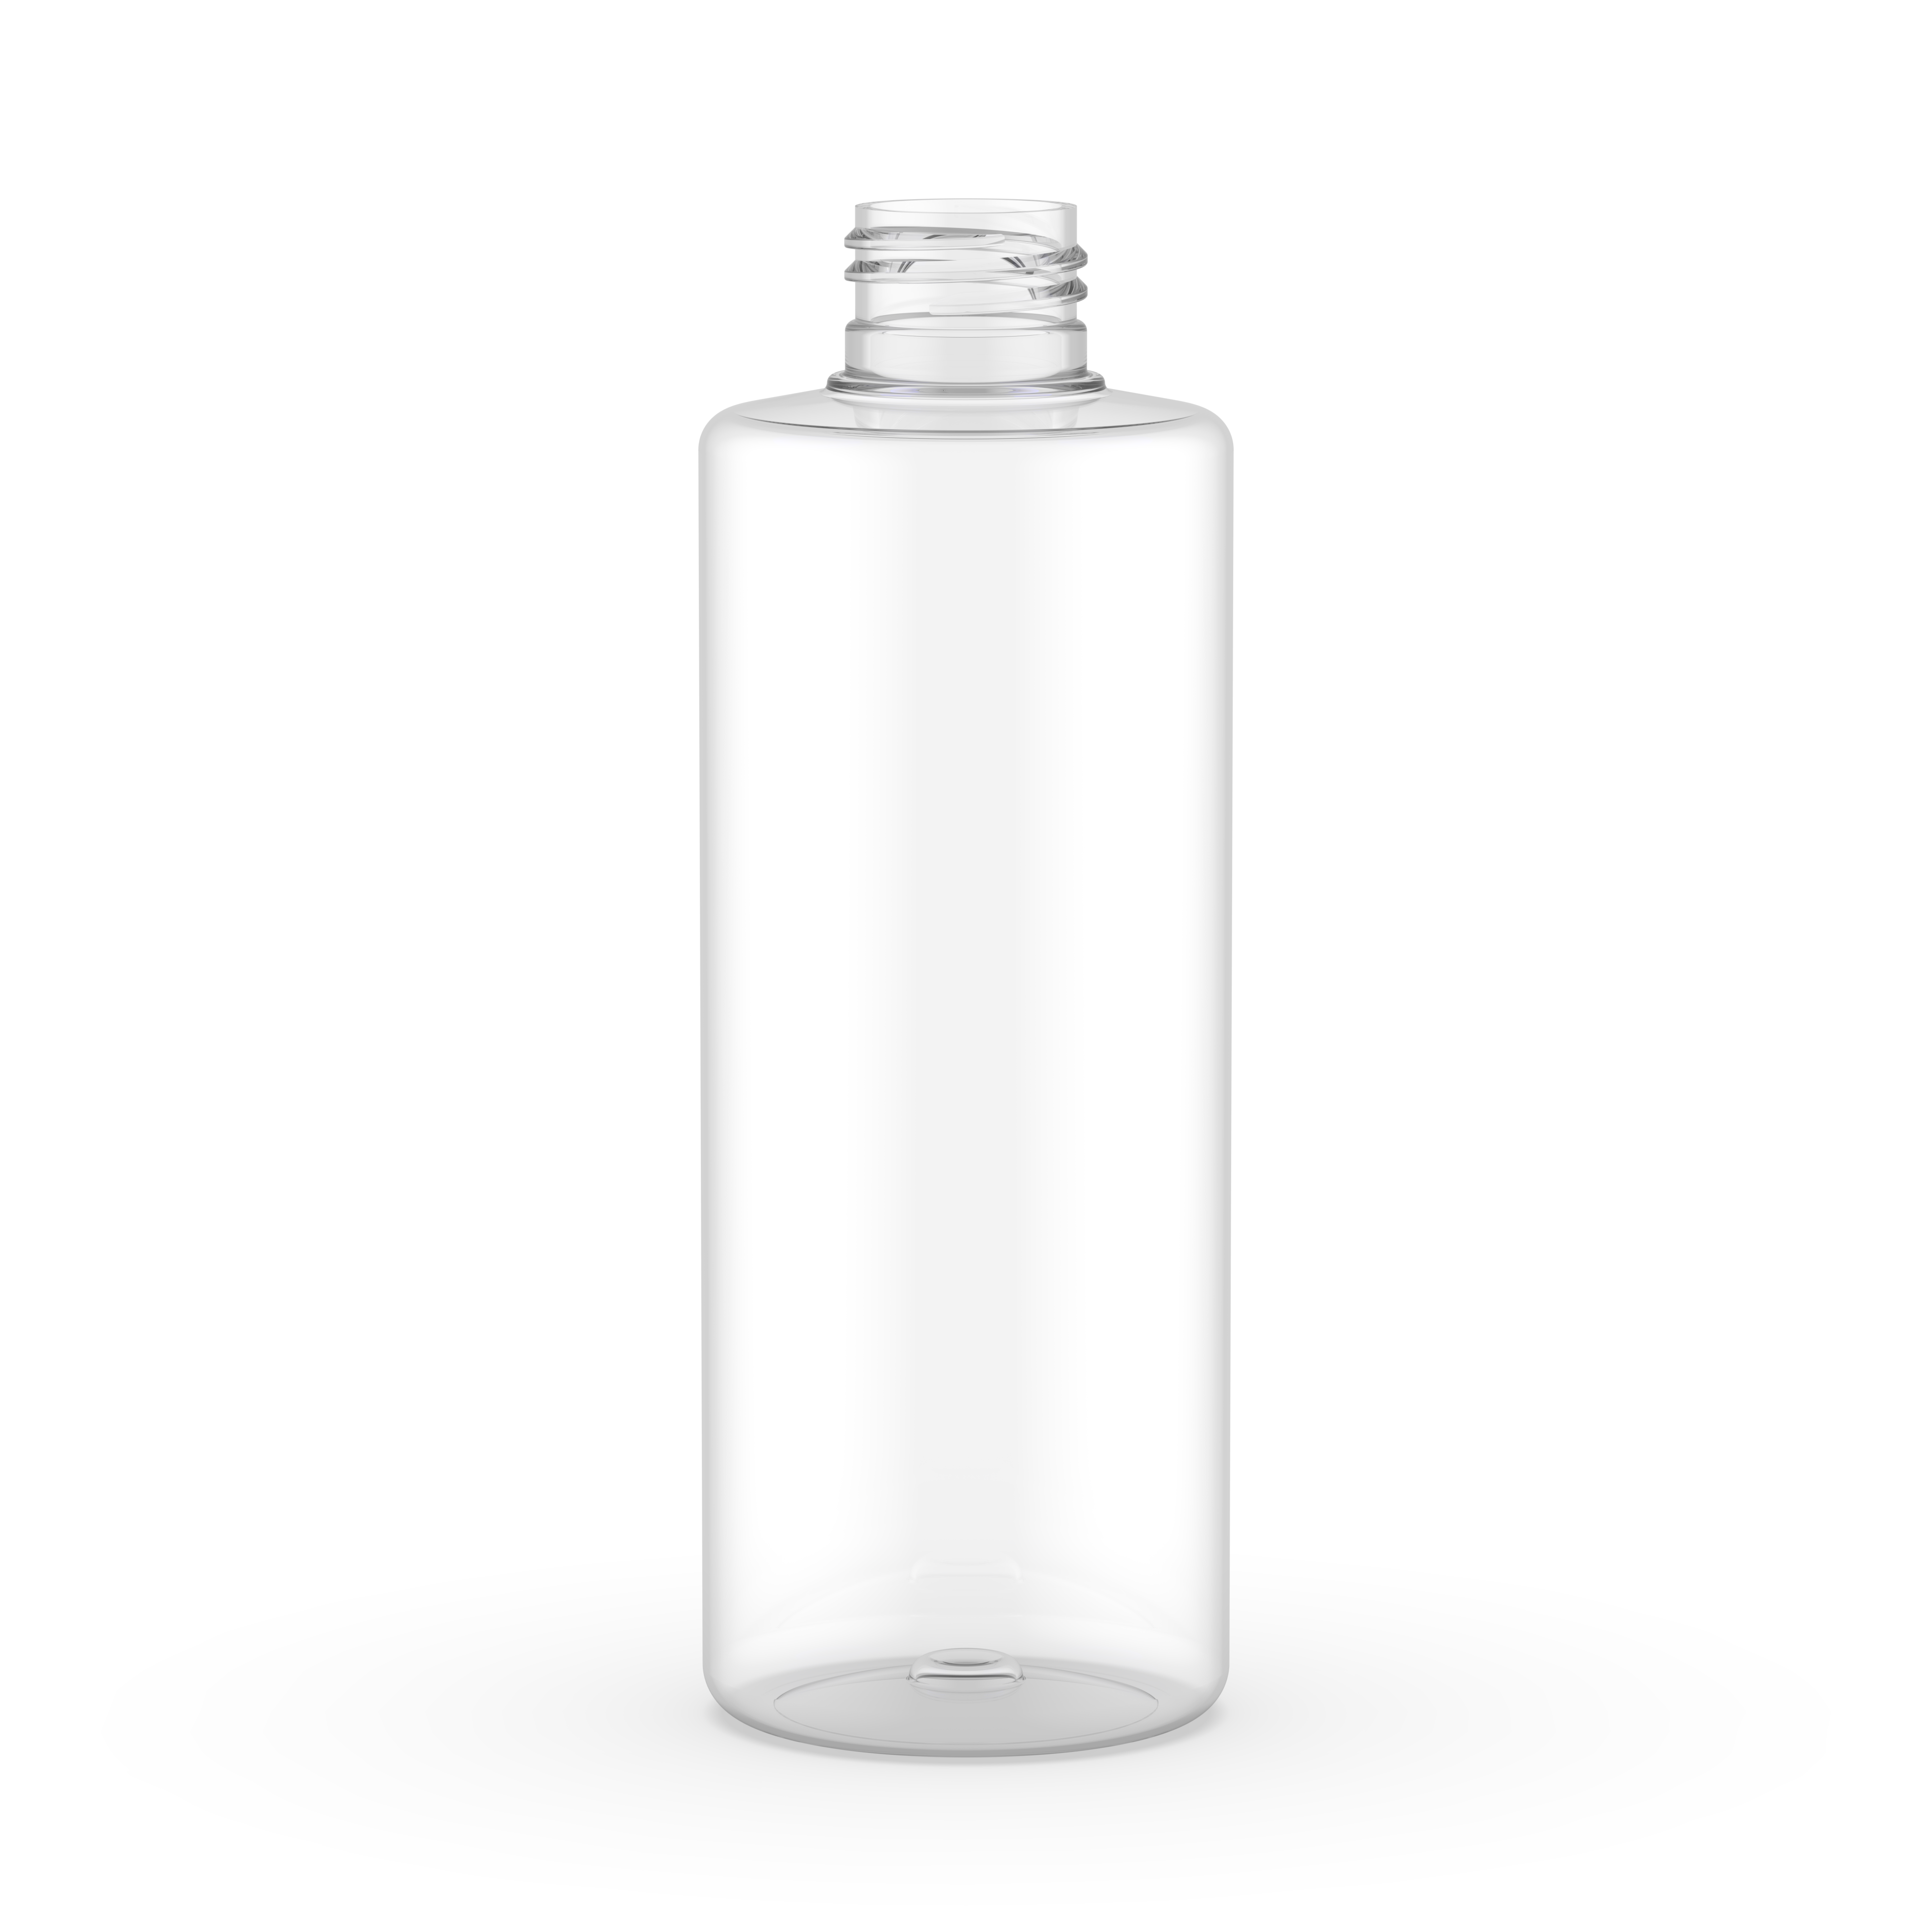 8 oz Clear PET Plastic Cylinder Bottle 24-410 Neck Finish